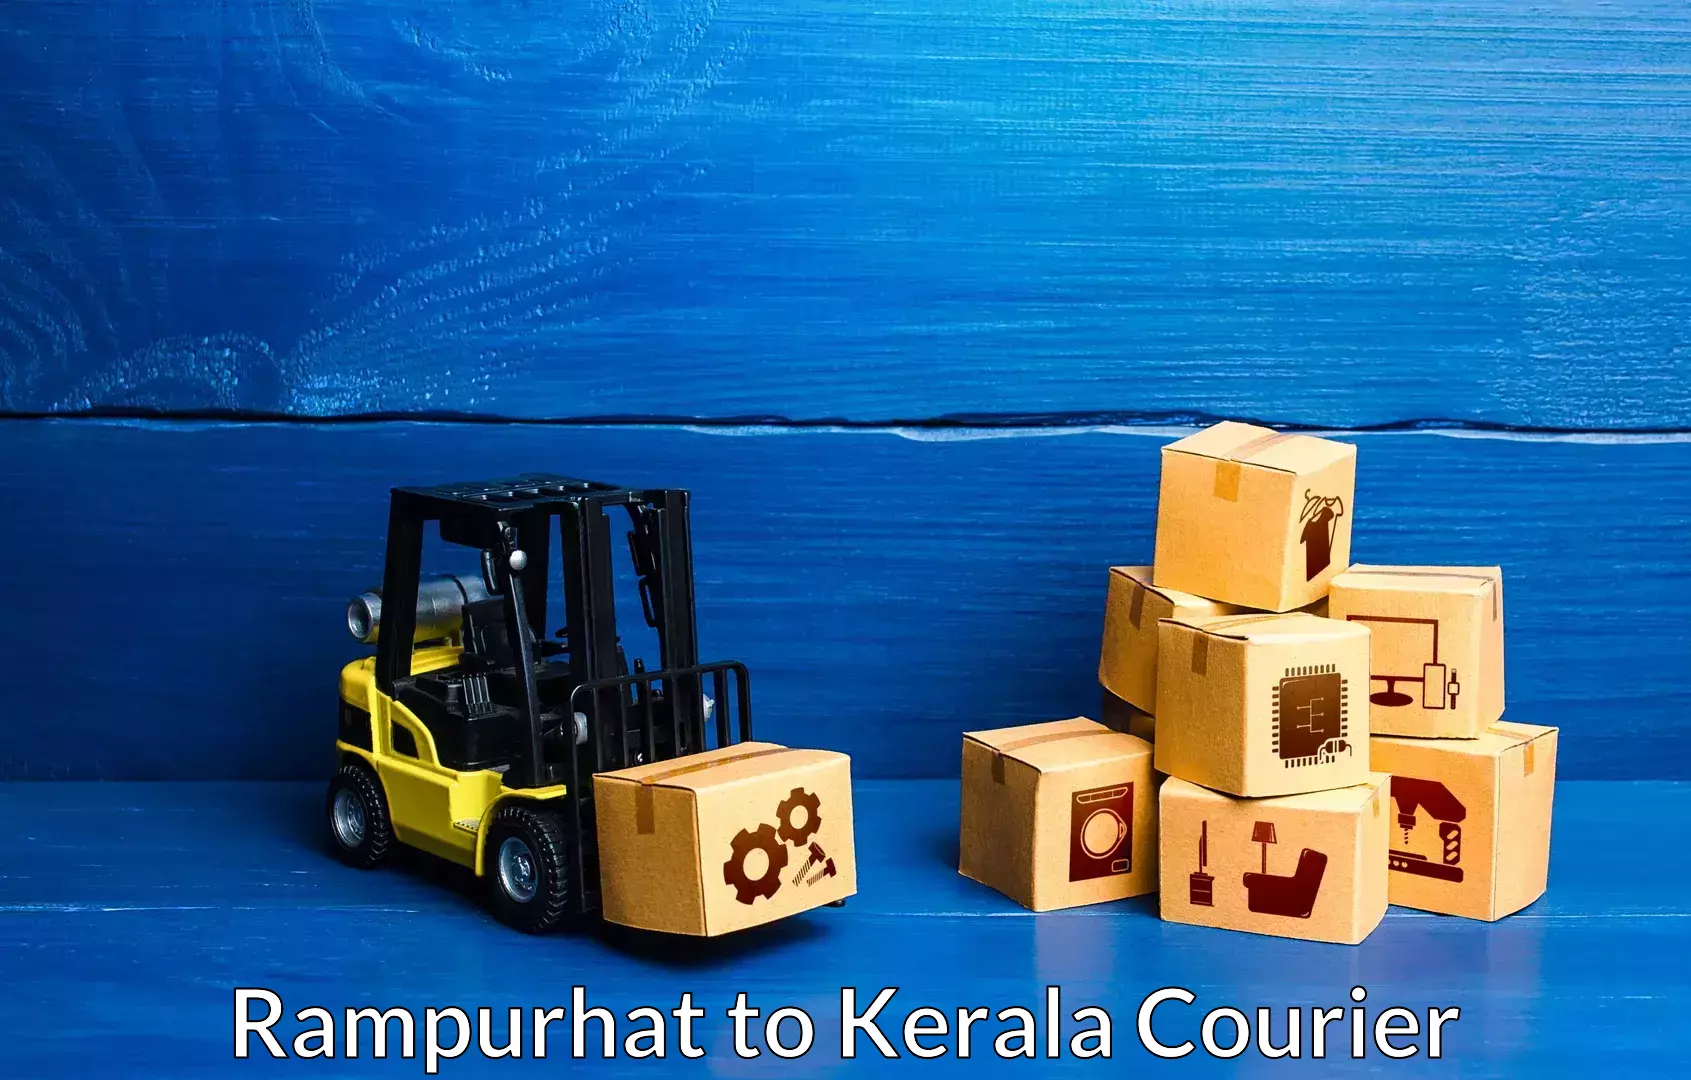 Furniture delivery service Rampurhat to Thodupuzha